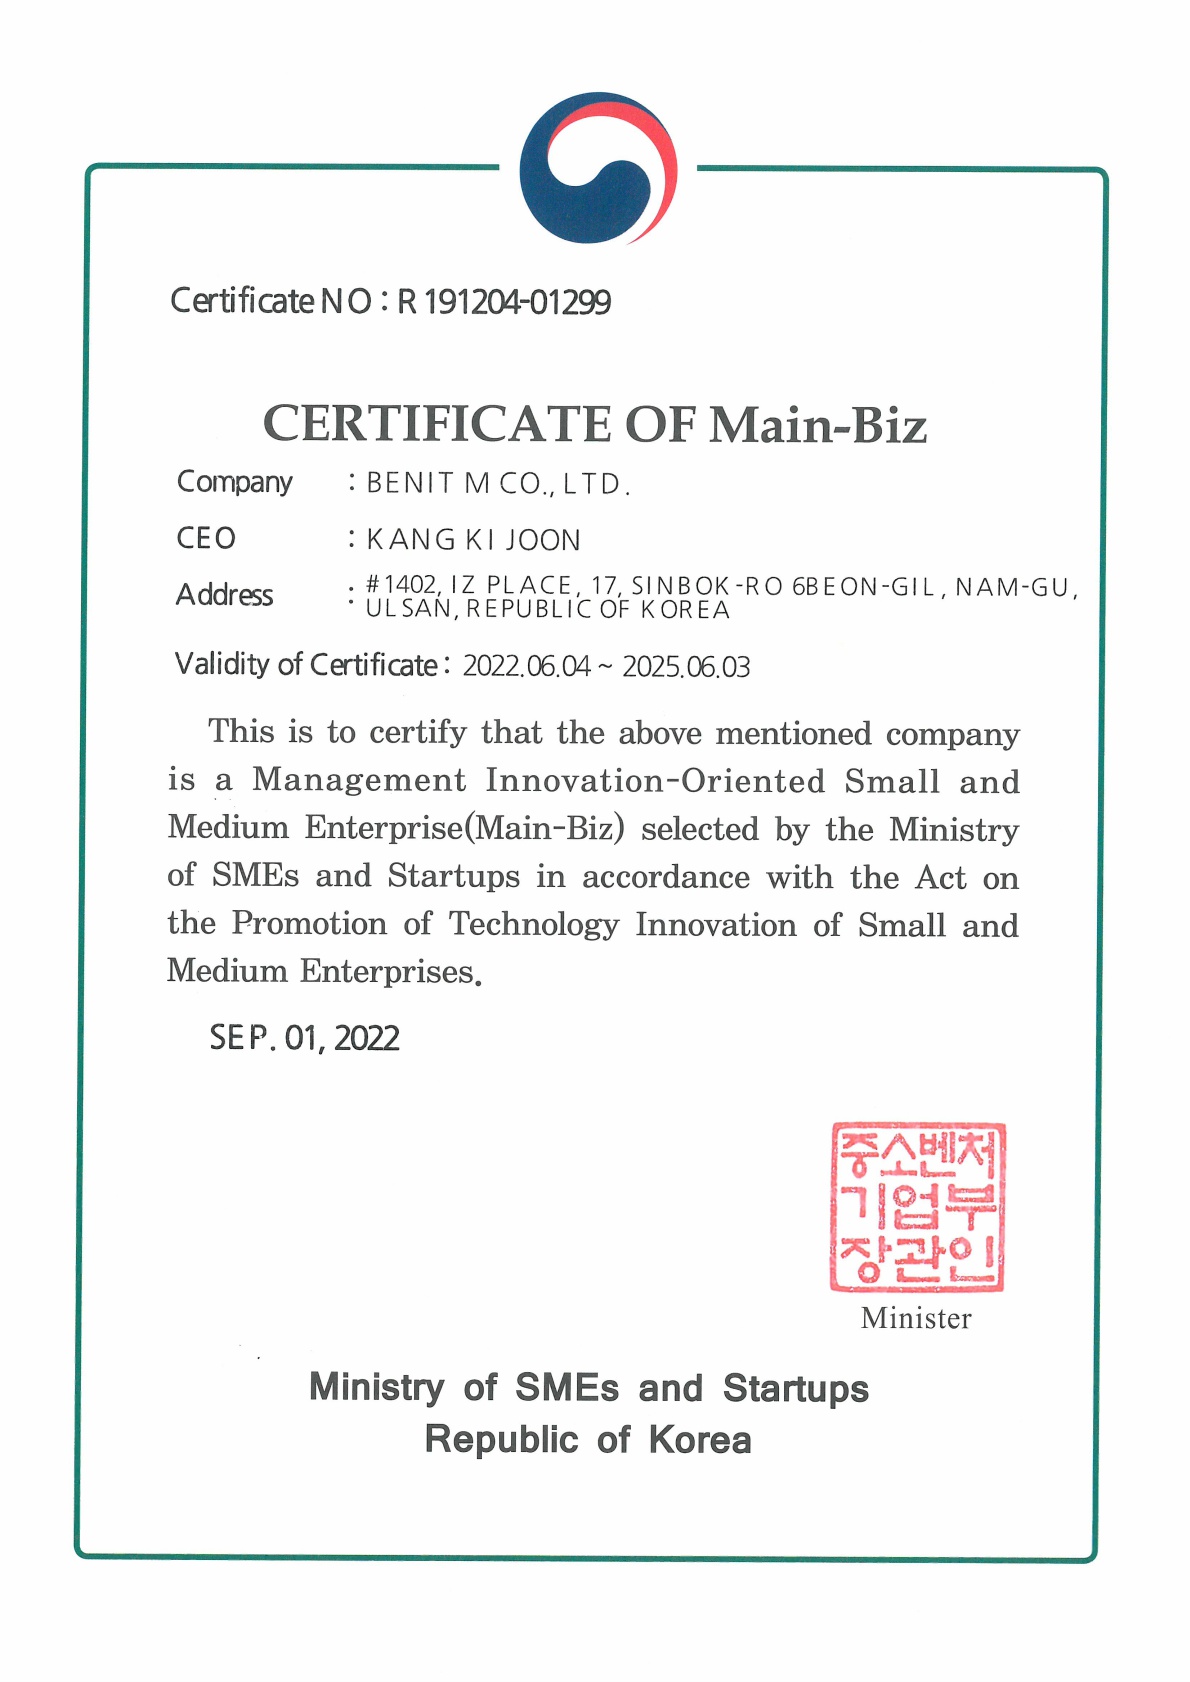 Main-Biz Certificate from KOSME